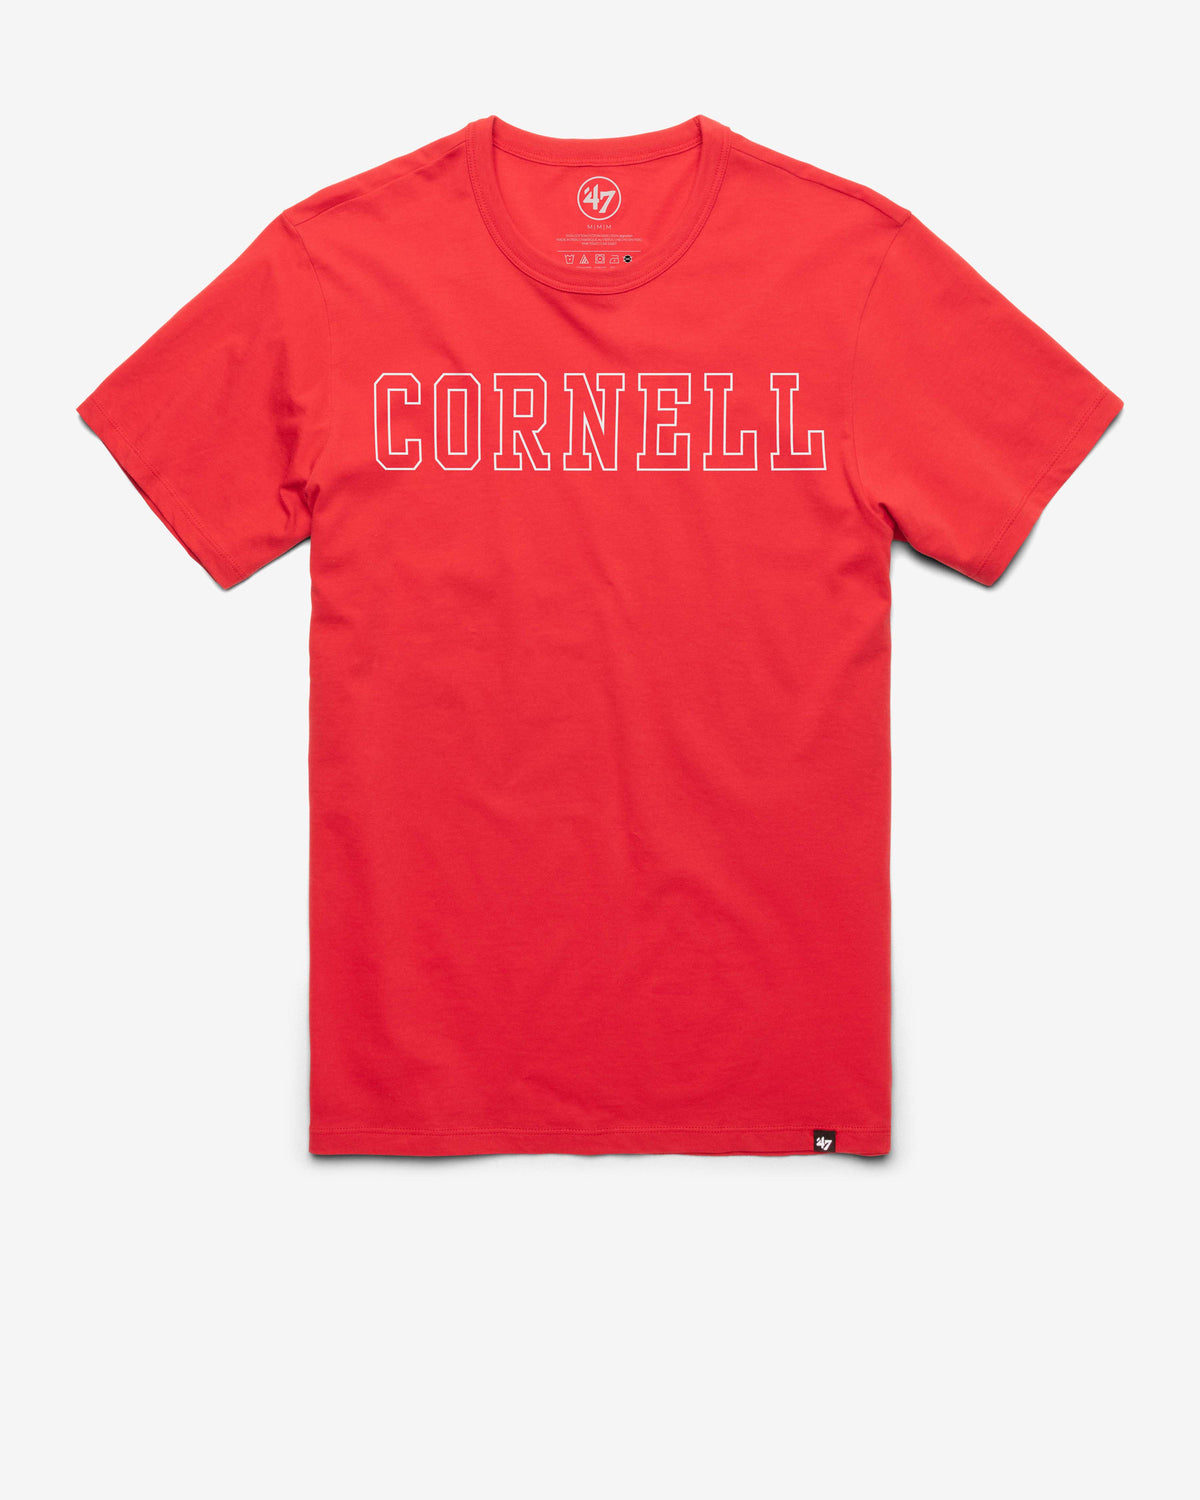 CORNELL BIG RED PREMIER '47 FRANKLIN TEE